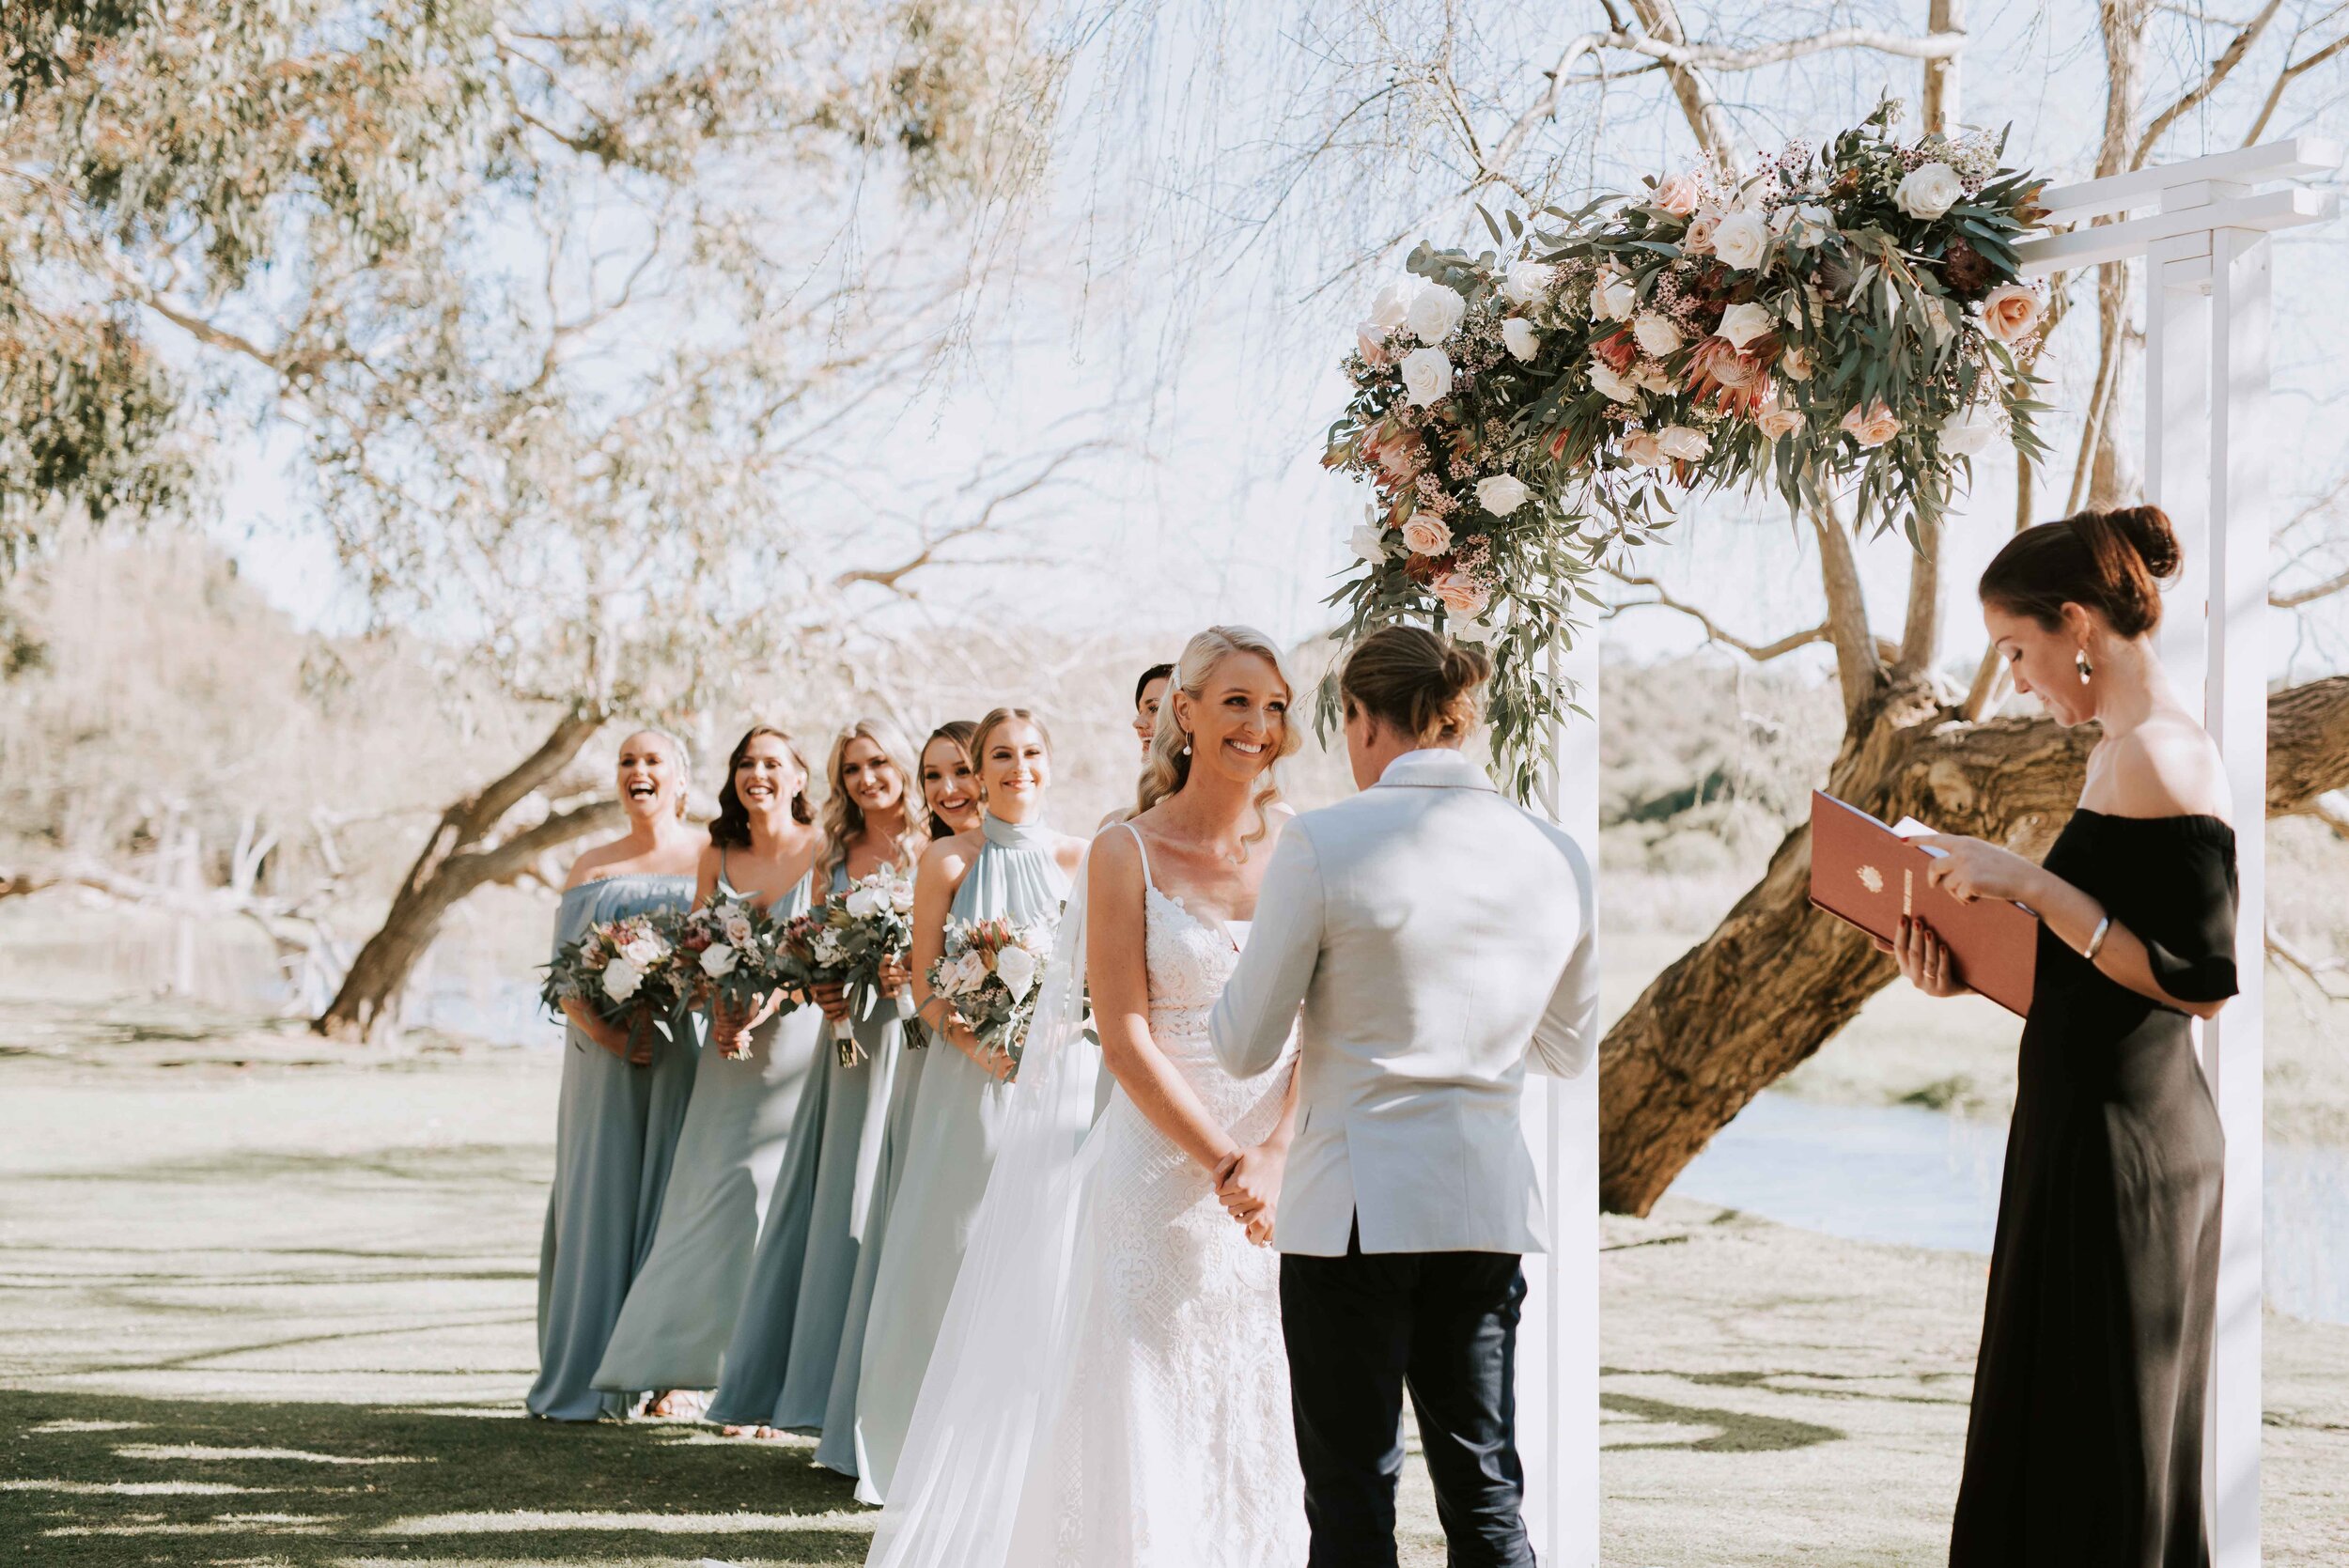 Yanchep park beautiful spring wedding | Perth wedding photographer Amy Skinner-368.jpg